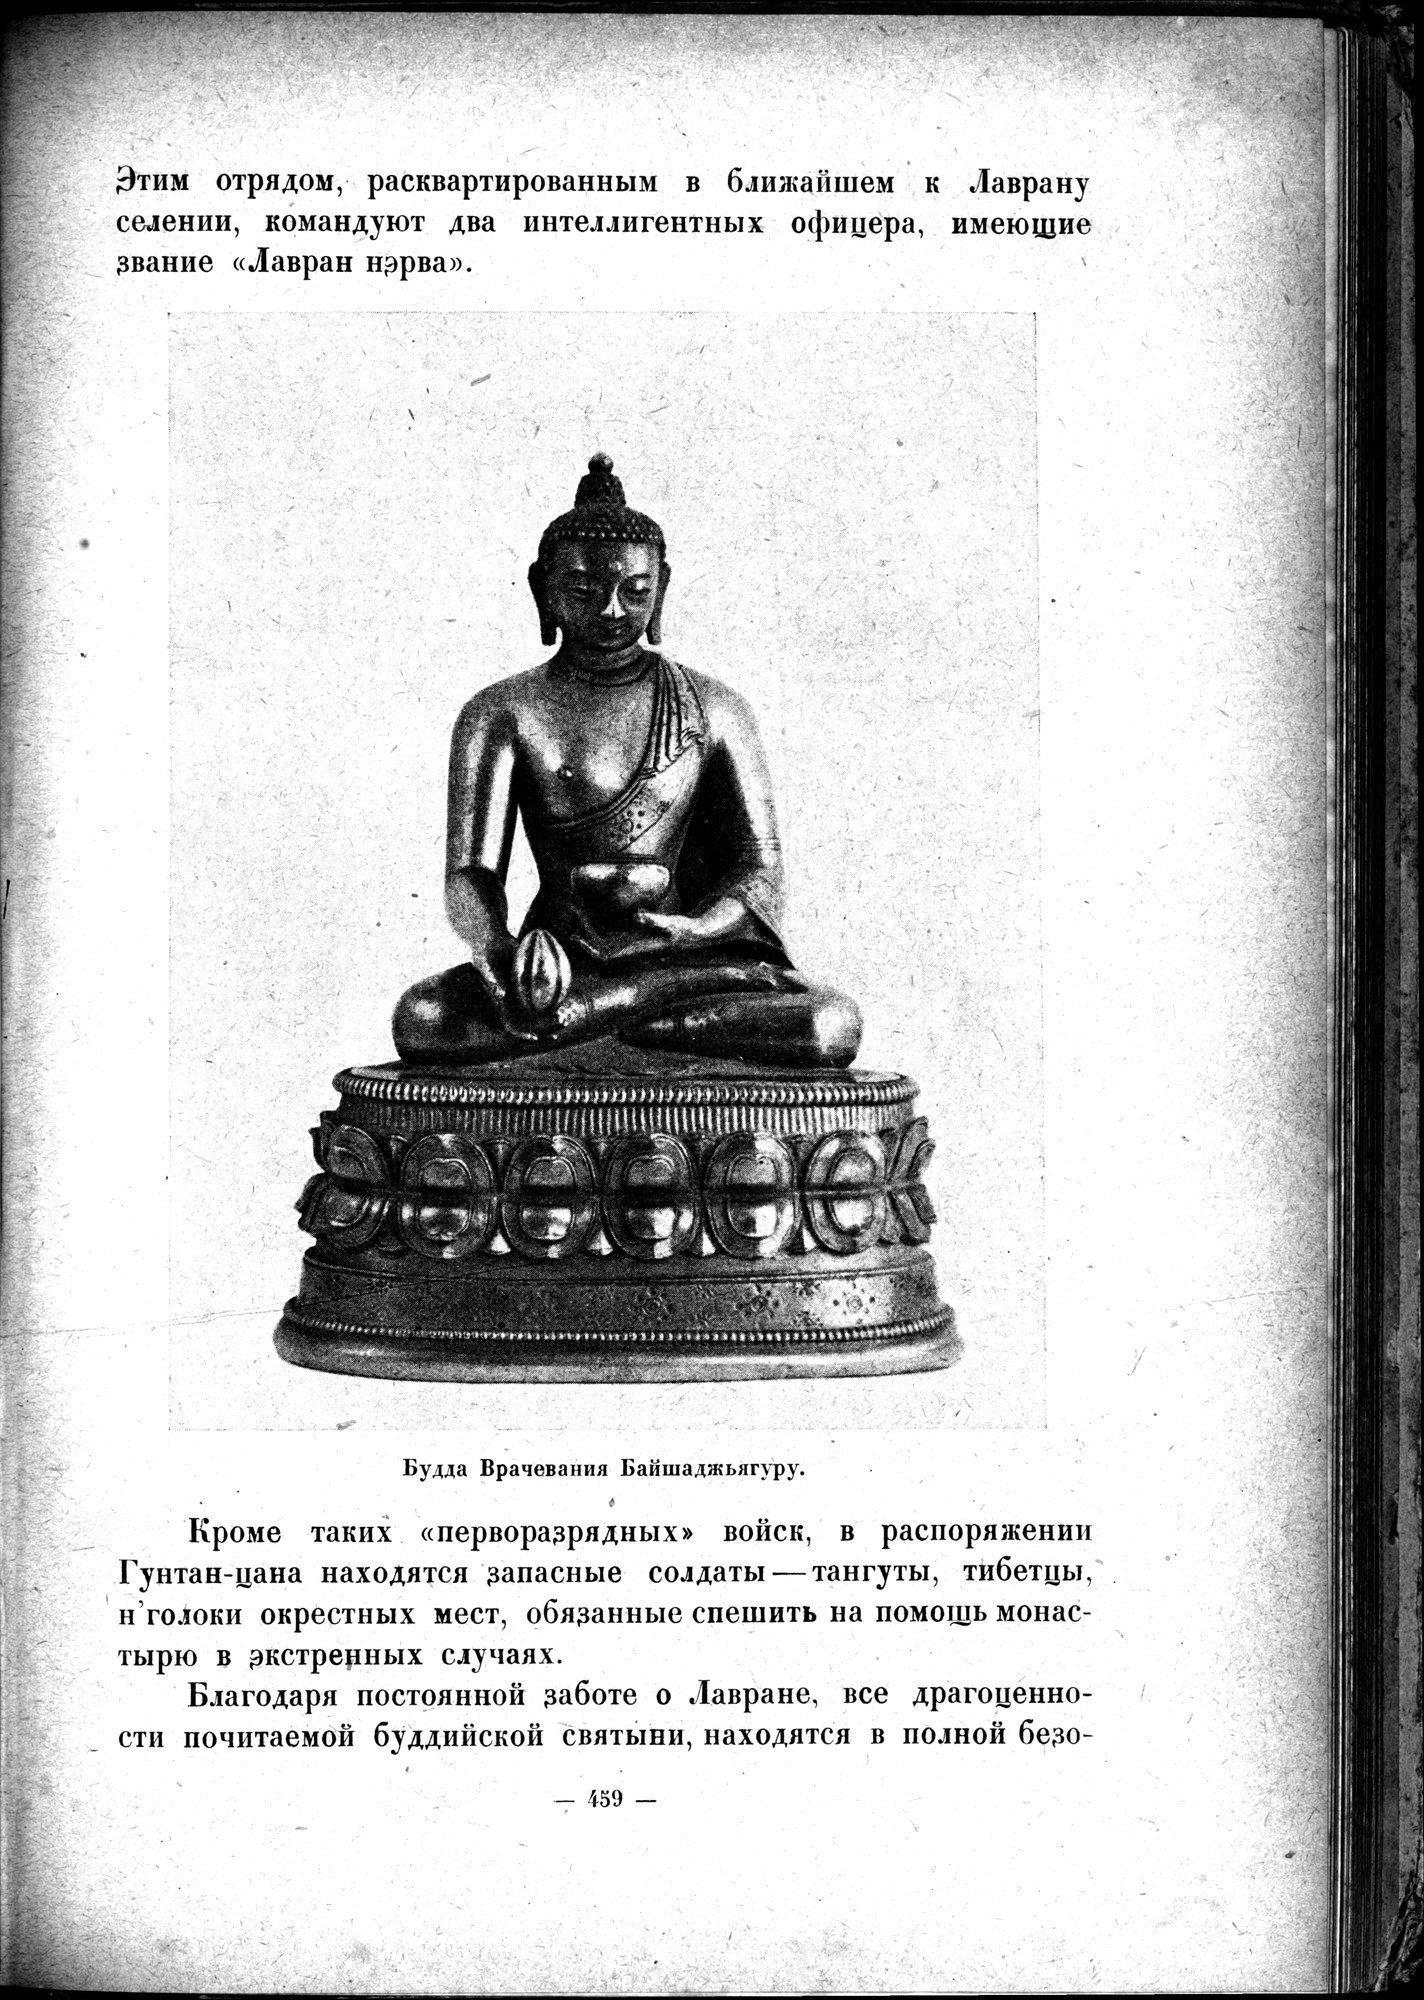 Mongoliya i Amdo i mertby gorod Khara-Khoto : vol.1 / Page 523 (Grayscale High Resolution Image)